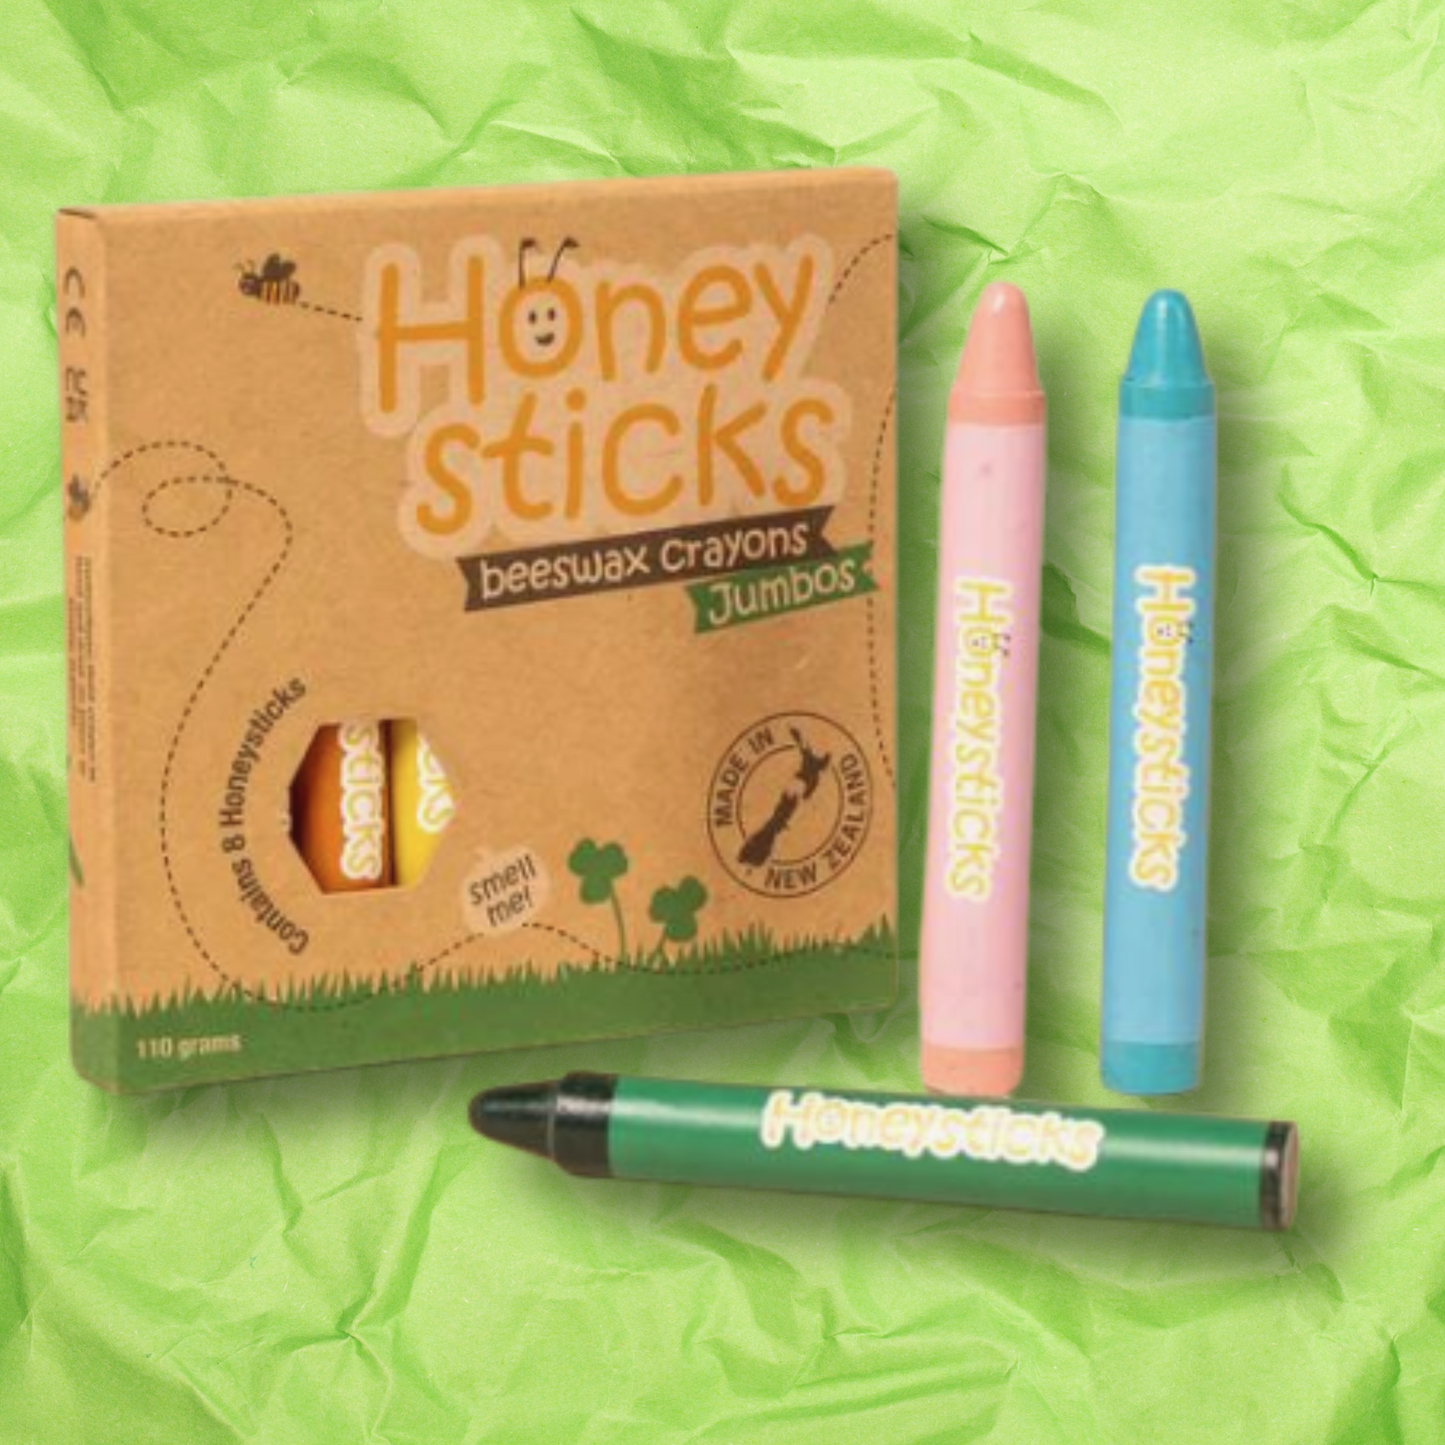 Honeysticks Jumbo crayons box with crumpled green paper background